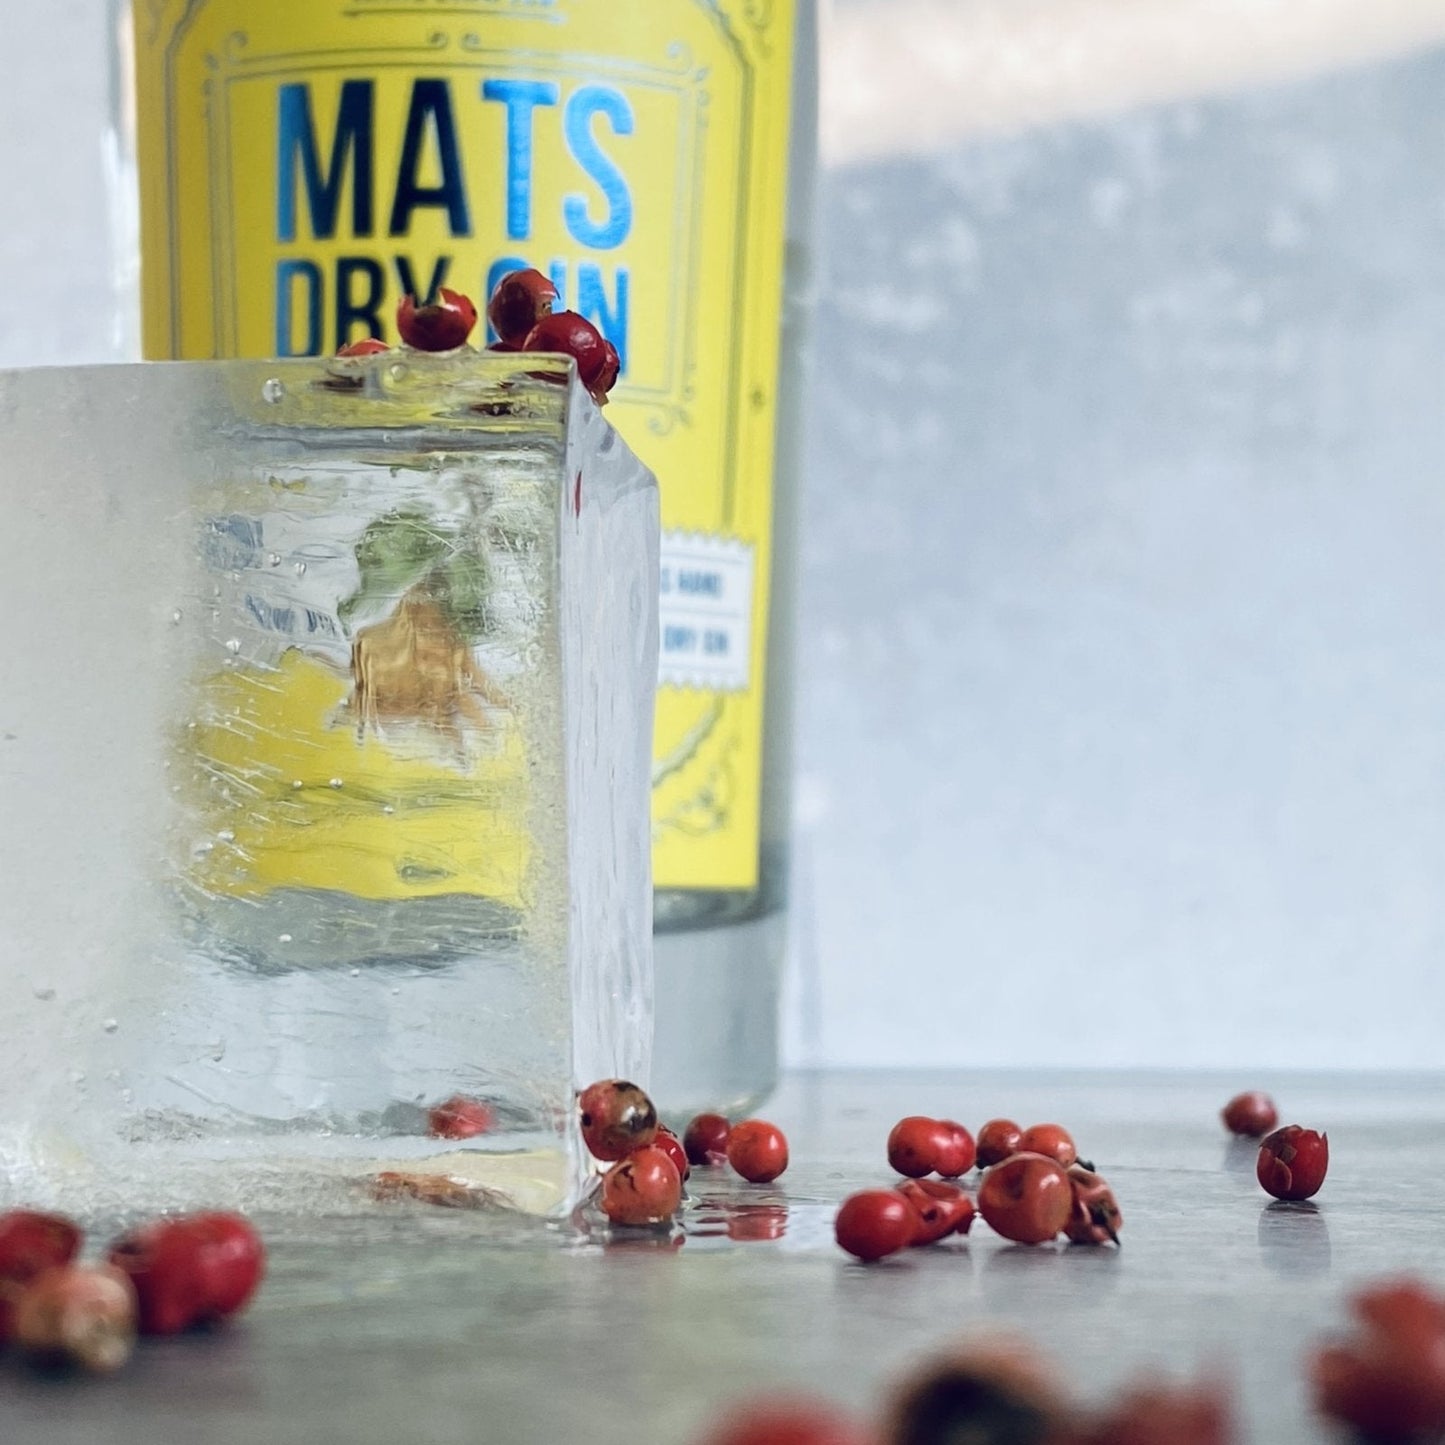 MATS Premium Dry Gin - Tina's Lädchen